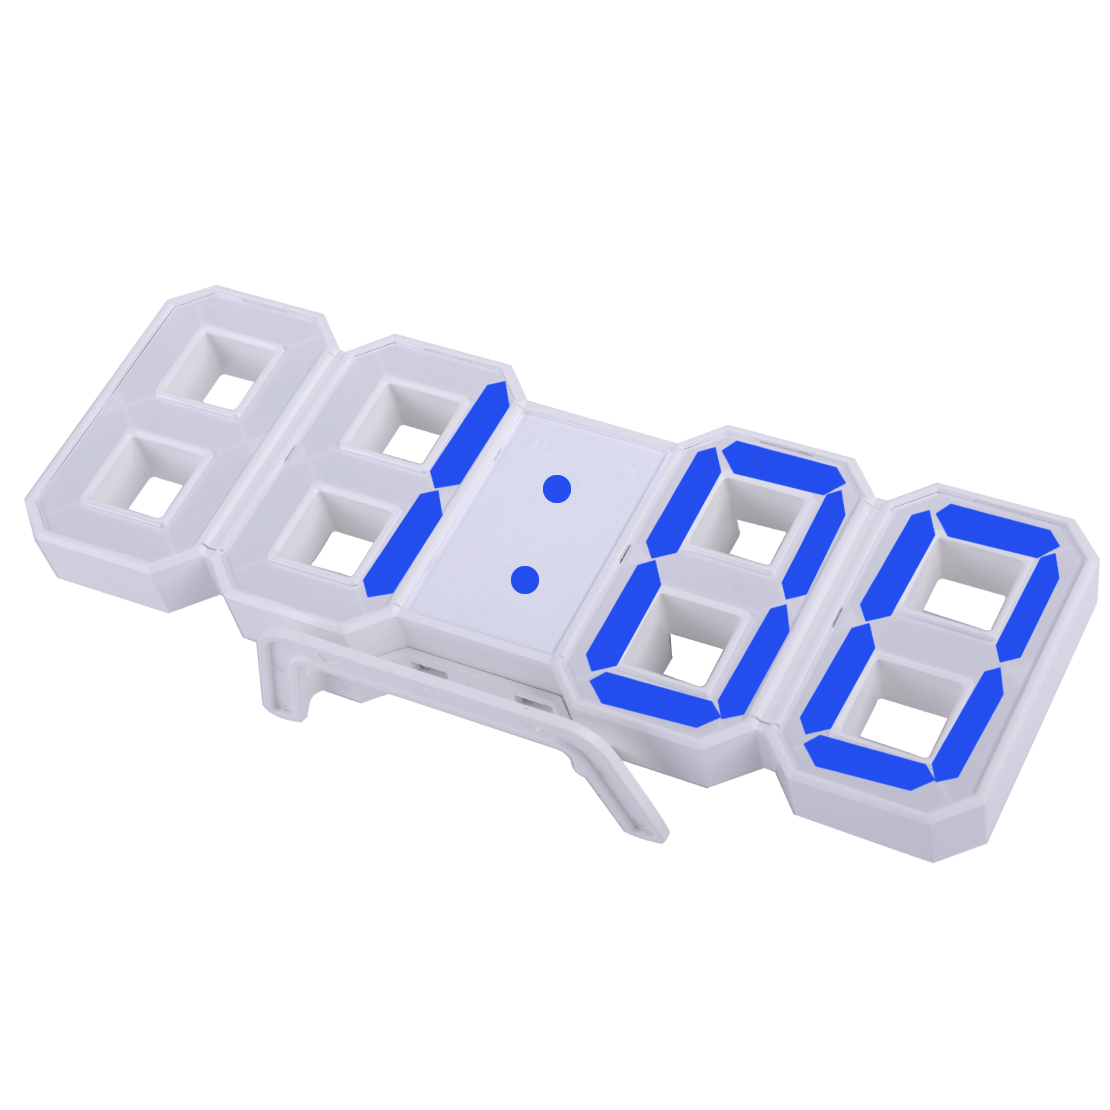 Moderne 3D Digital LED Wanduhr Wall Clock Tabelle Uhr Alarm Snooze 24/12Hr Weiß 